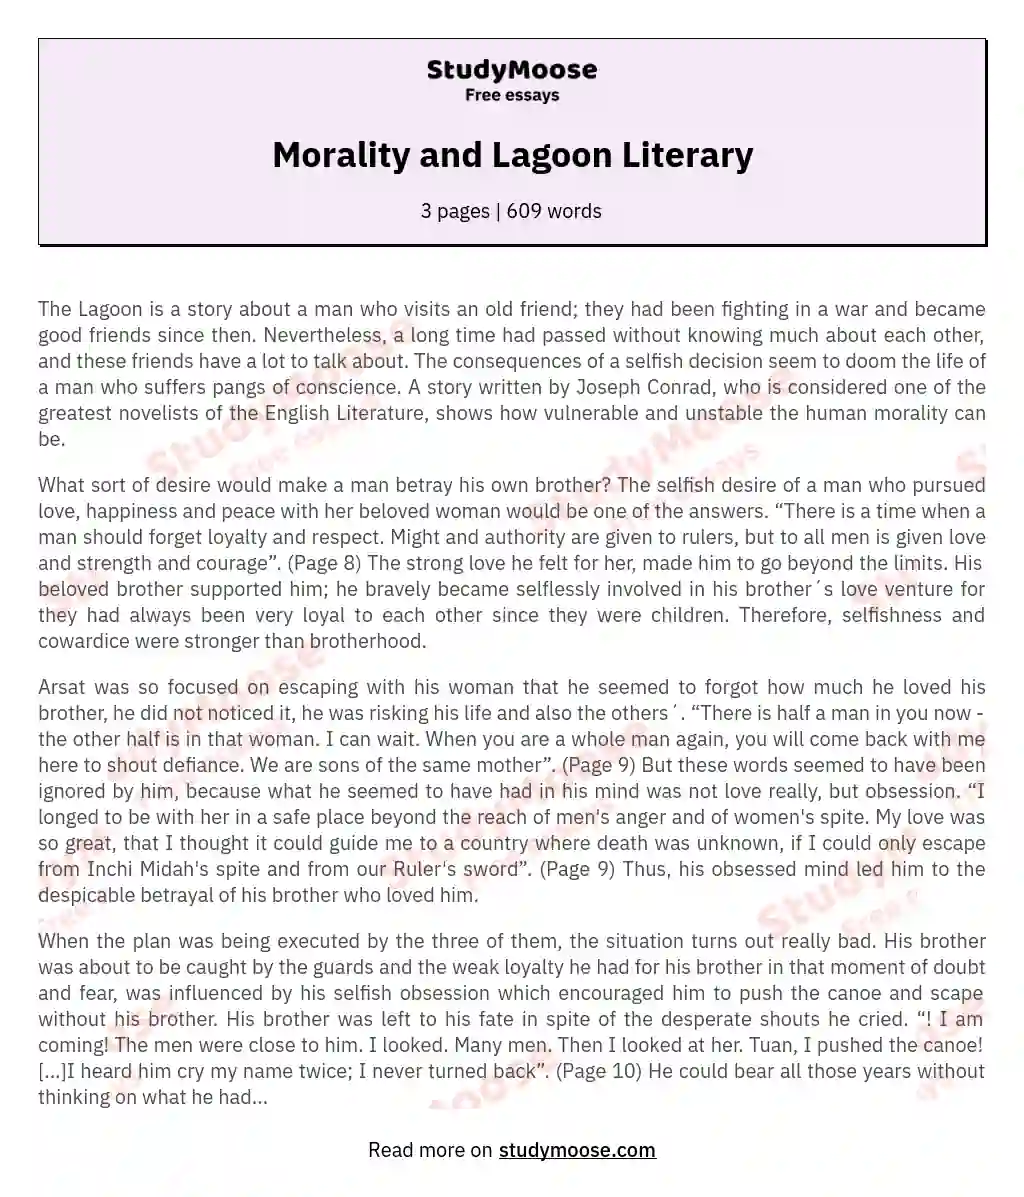 Morality and Lagoon Literary essay